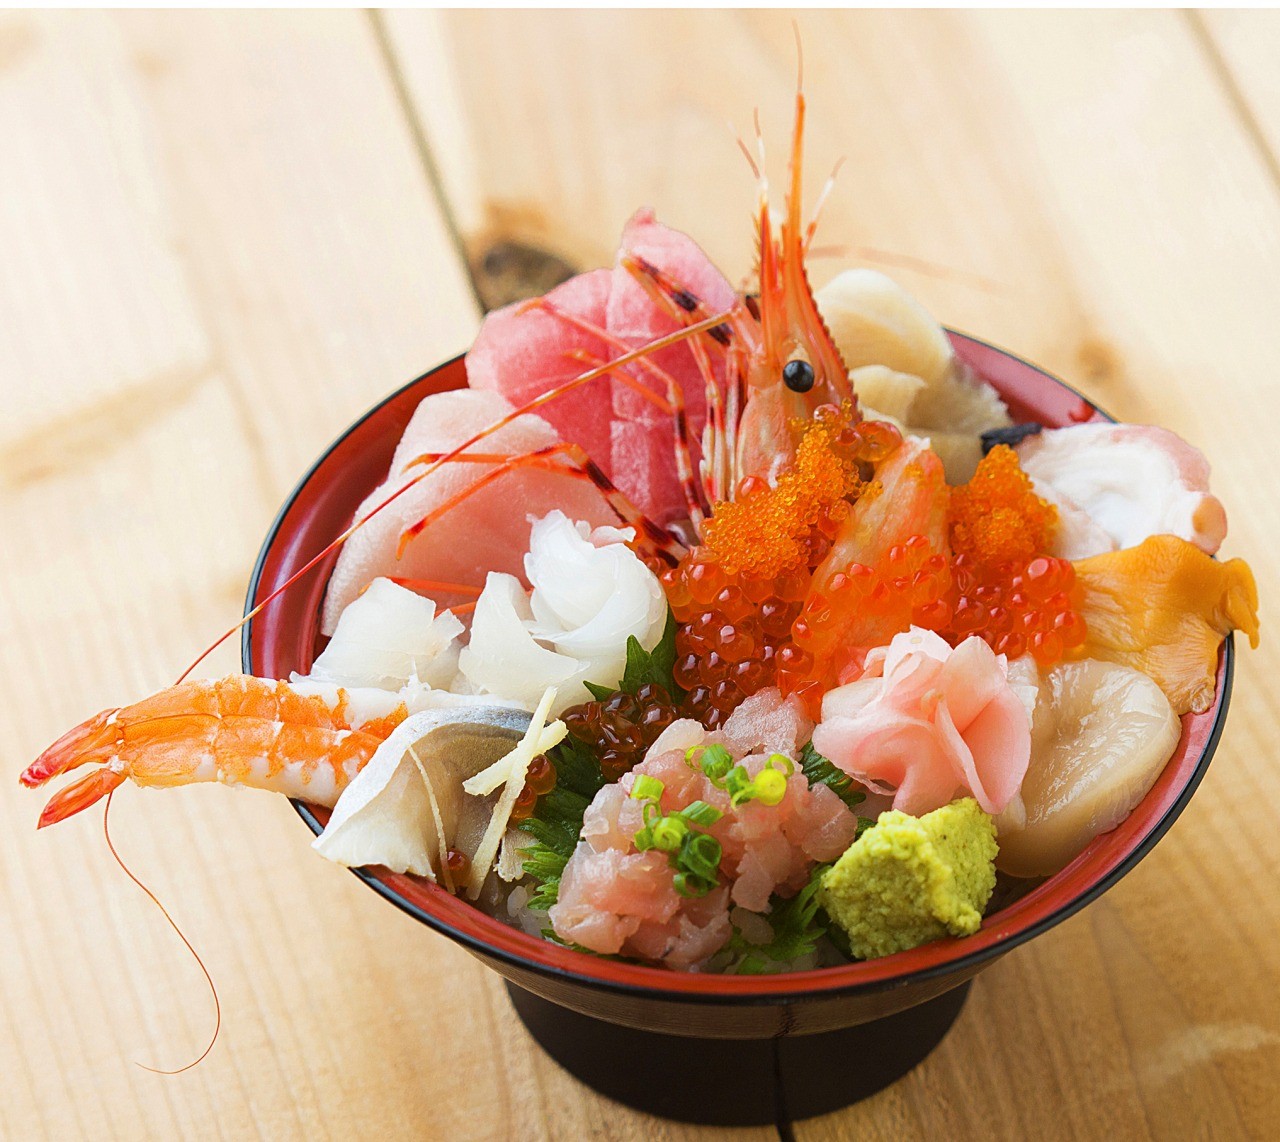 Onagawa Town “Kaisendon” (A Bowl of Rice Topped with Seafood), Coho Salmon, Hoya